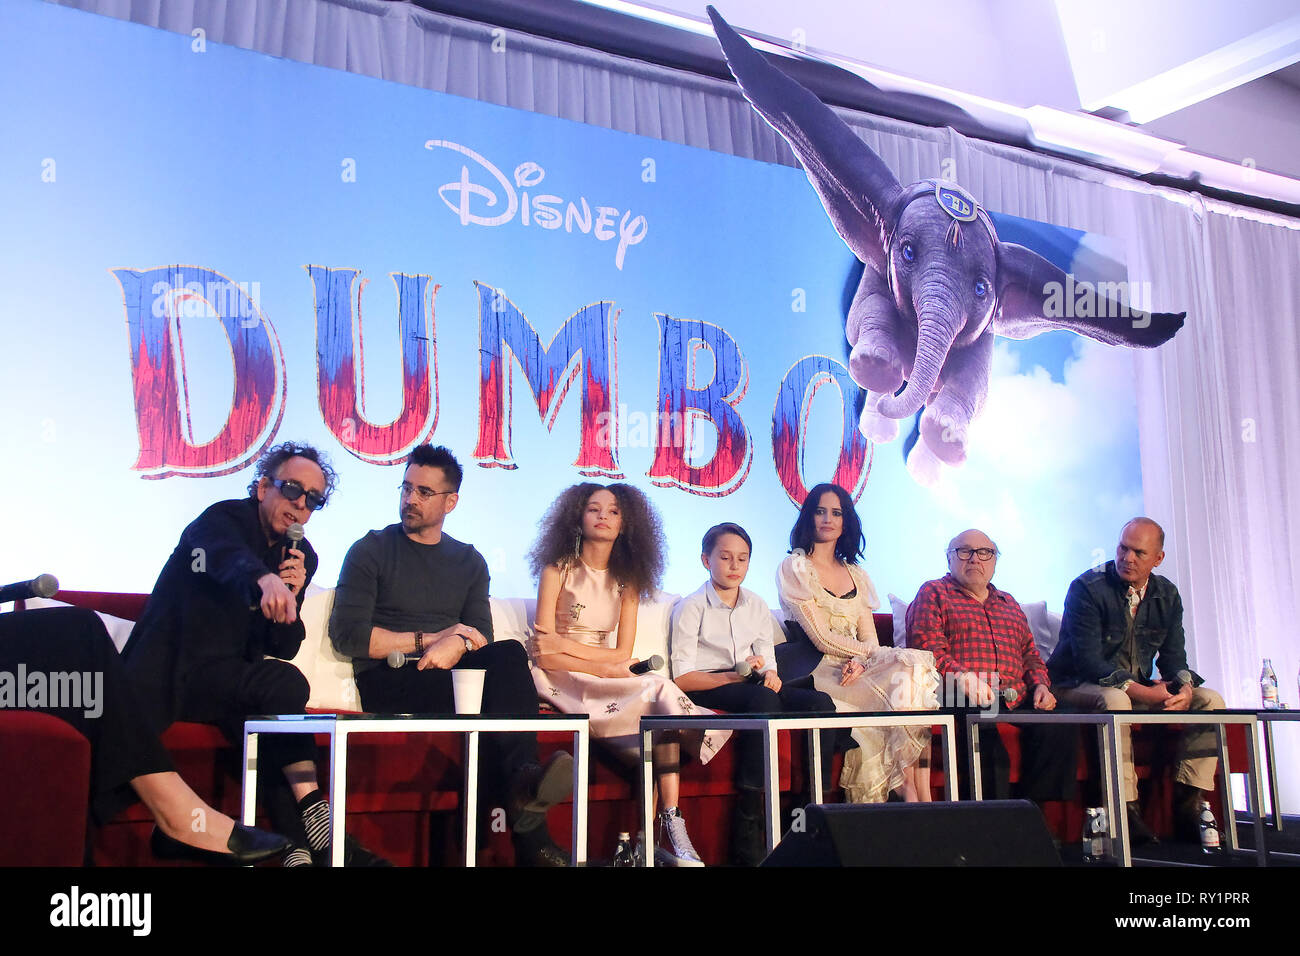 Tim Burton, Colin Farrell, Nico Parker y cast 03/10/2019 'Dumbo'  conferencia de prensa celebrada en el Beverly Hilton Hotel de Beverly  Hills, CA. Foto por Kazuki Hirata / HNW / PictureLux Fotografía